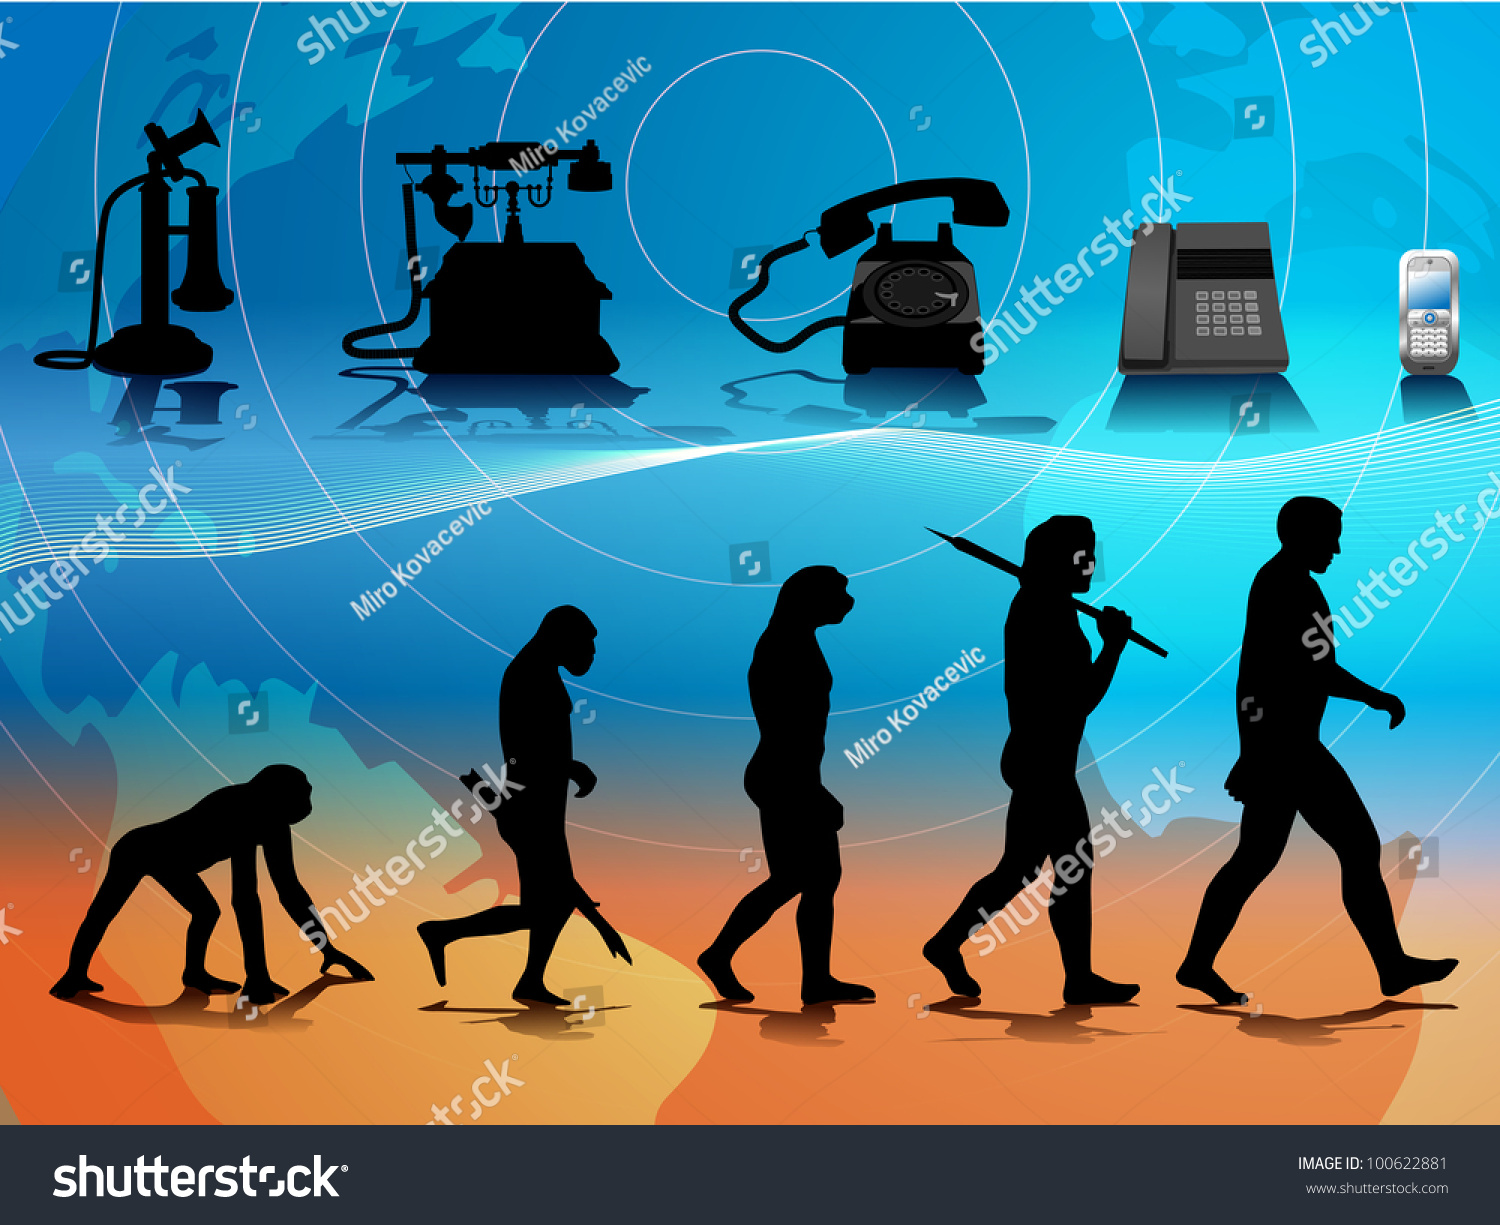 Прогресс средств связи. Эволюция коммуникации. Эволюция технологий человечества. Эволюция средств коммуникации. Эволюция телефонов.